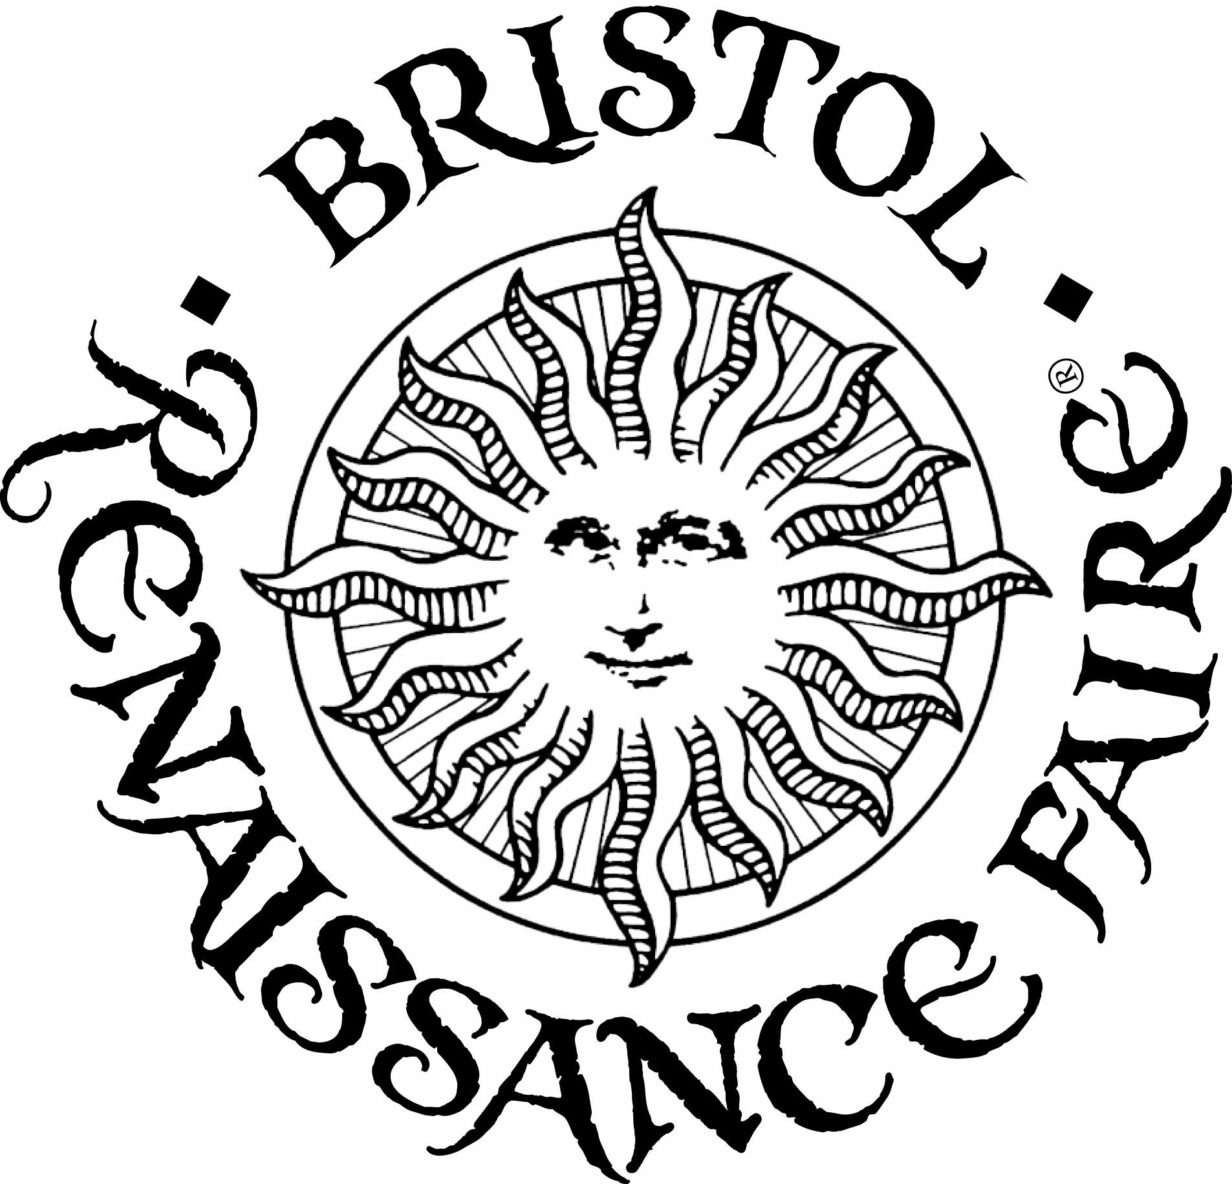 “Bristol Renaissance Faire” at ETB East Troy Brewery